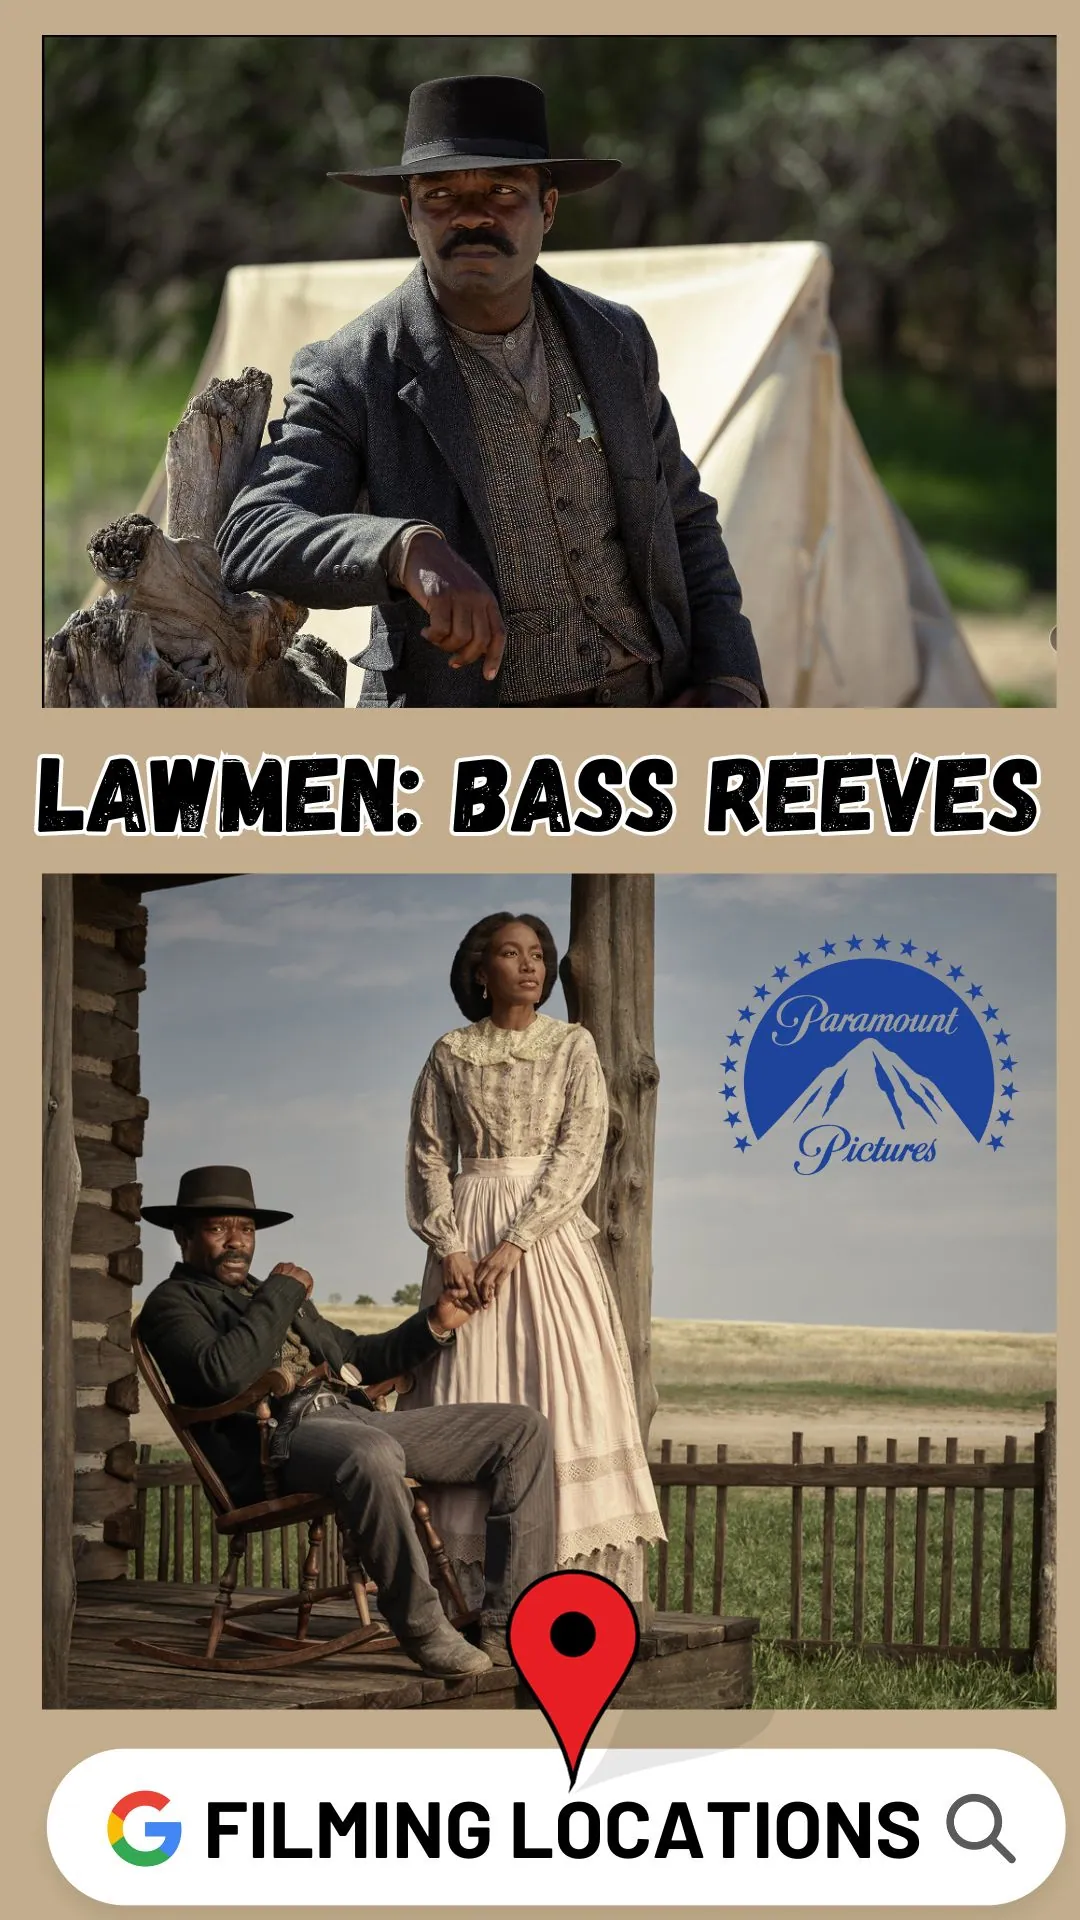 Lawmen Bass Reeves Filming Locations